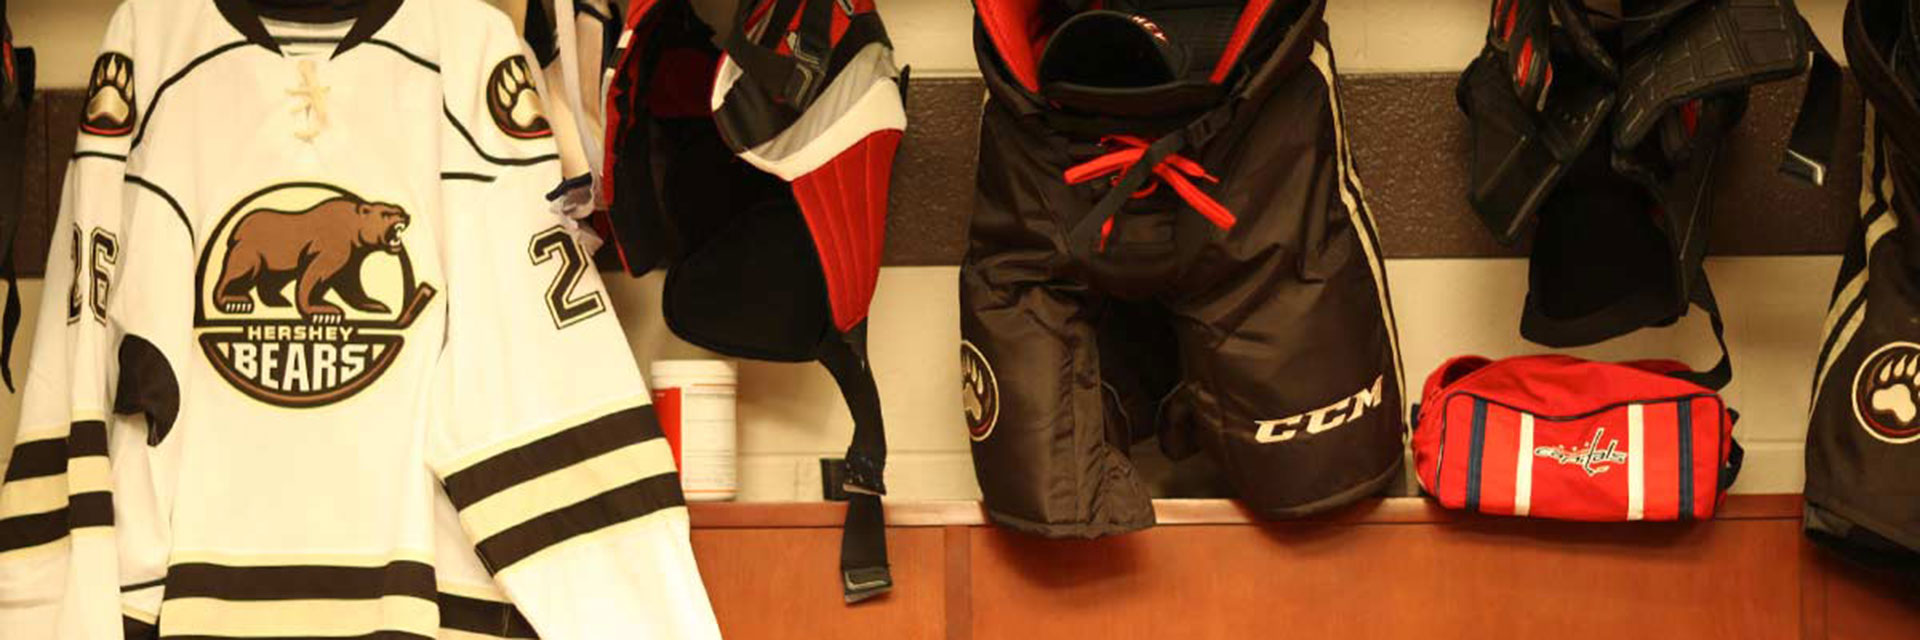 equipment in the locker room